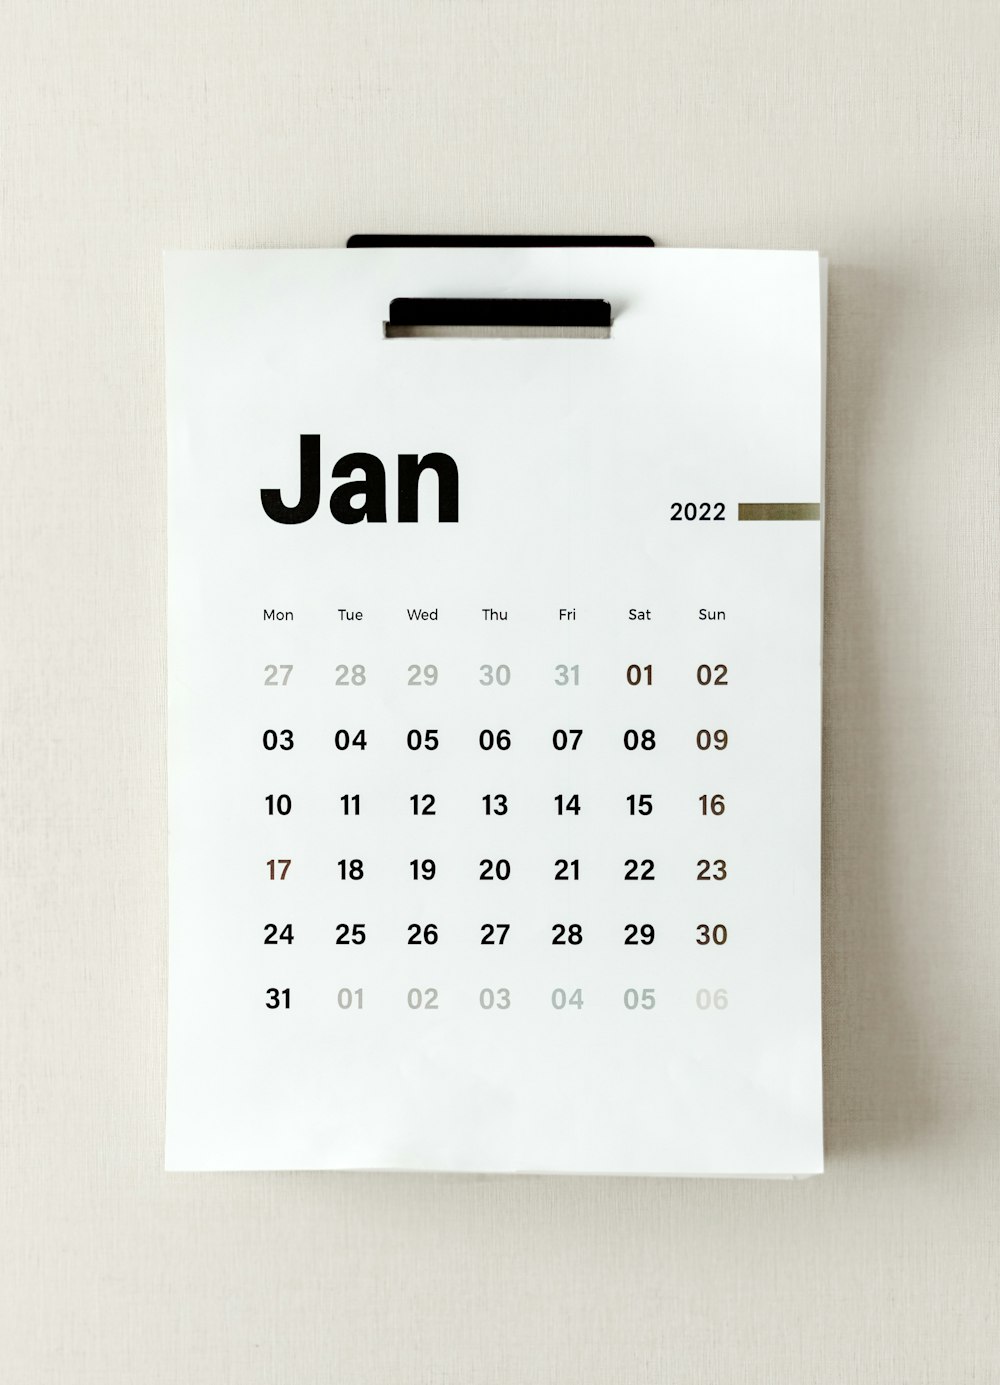 Jan という単語が書かれたカレンダー